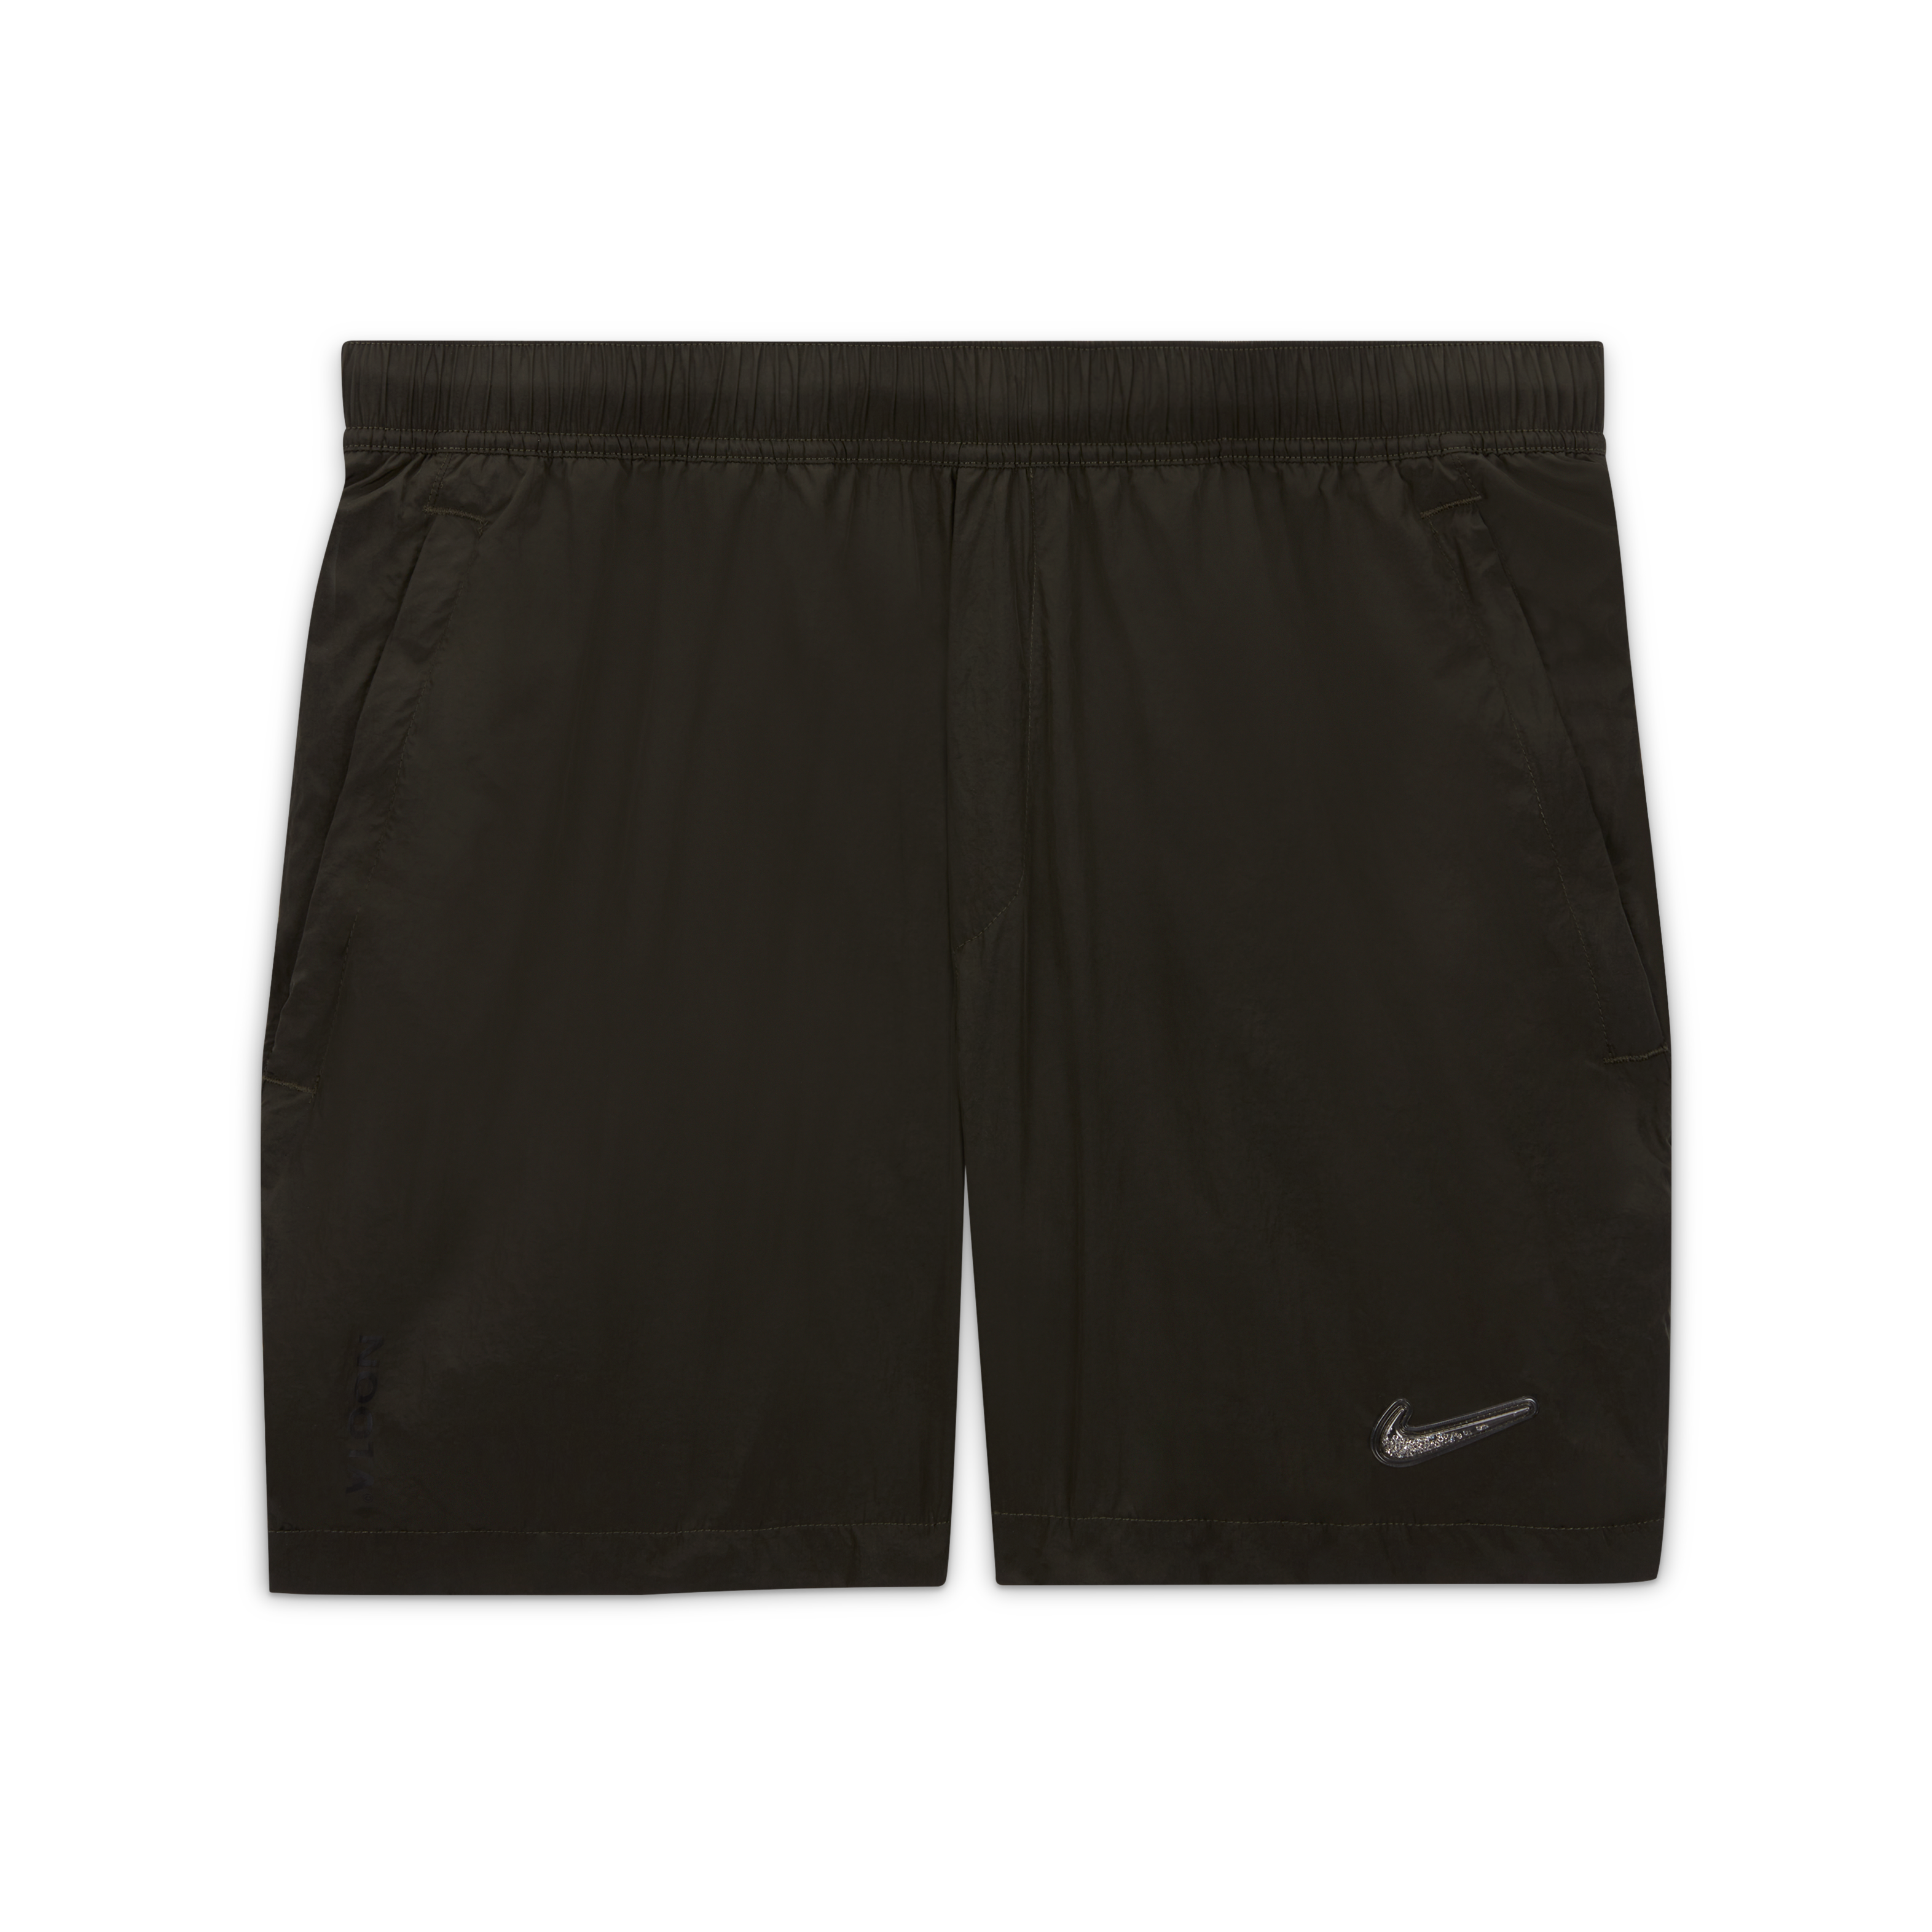 NOCTA x Nike Turks & Caicos Shorts 'Black'